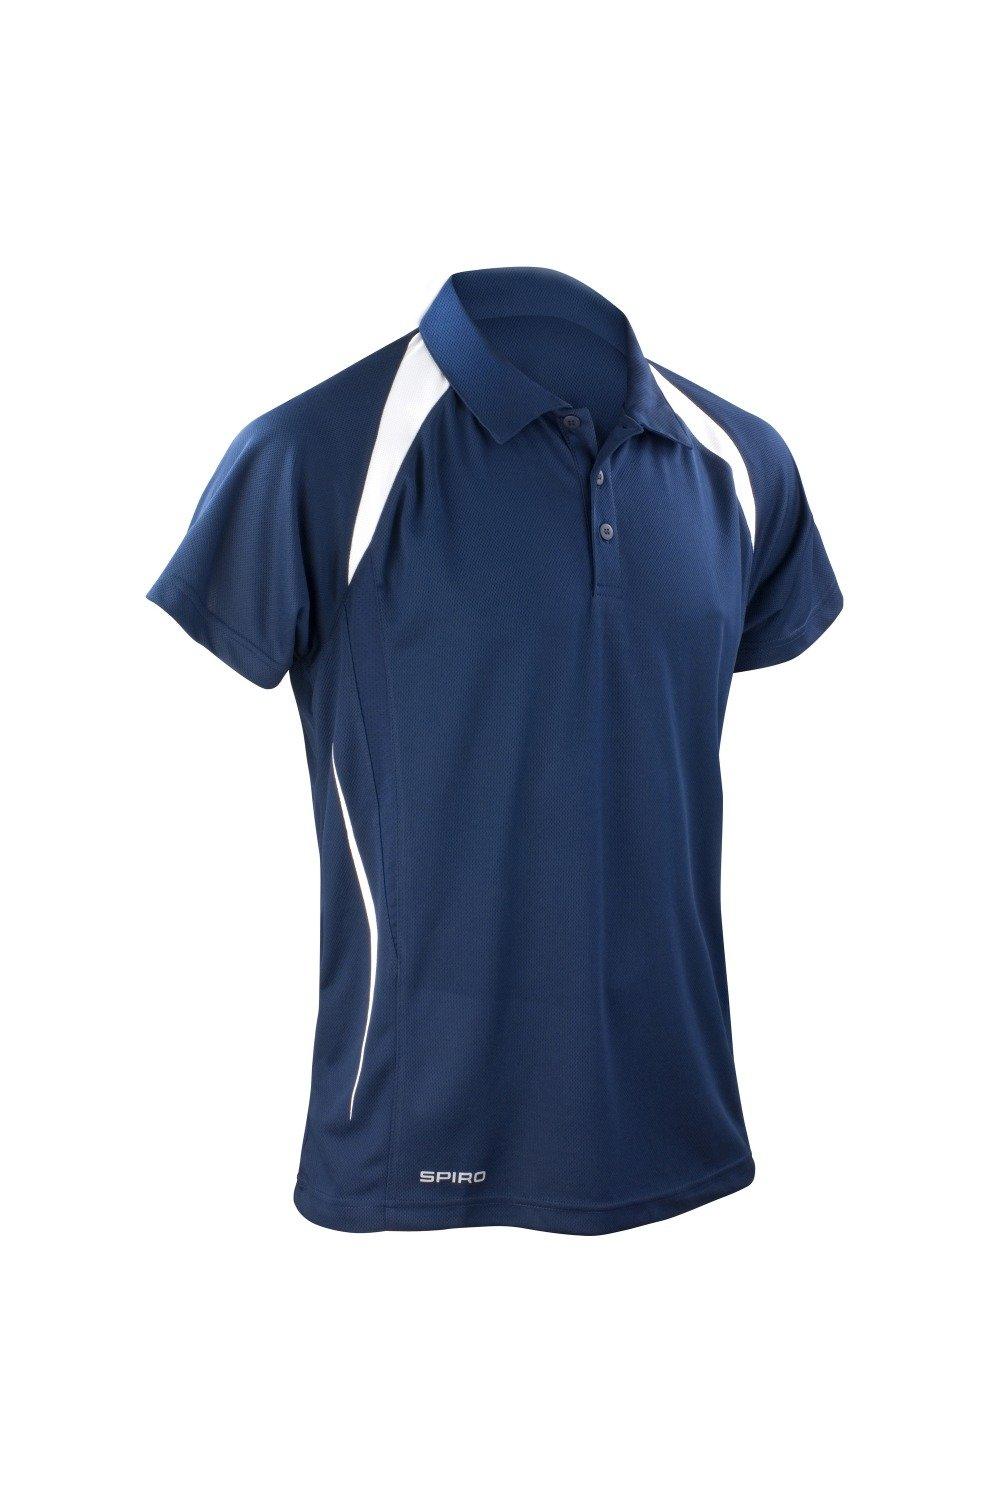 Рубашка поло Sports Team Spirit Performance Spiro, темно-синий